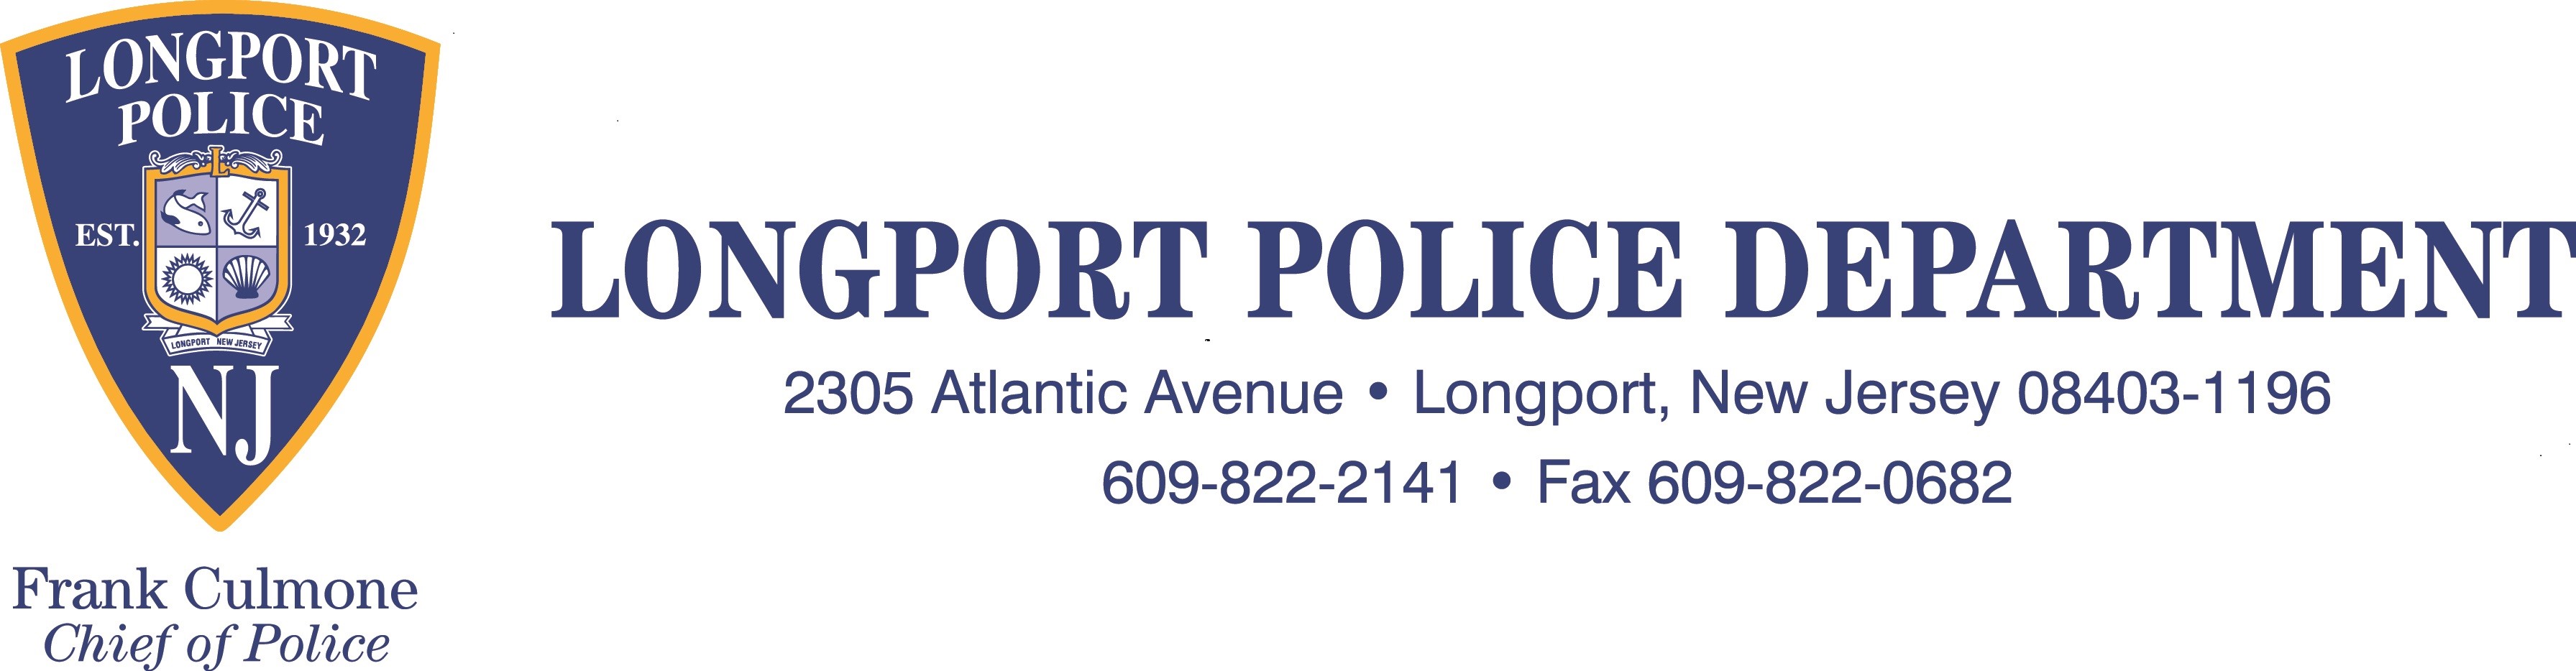 Longport Police Department, NJ Public Safety Jobs